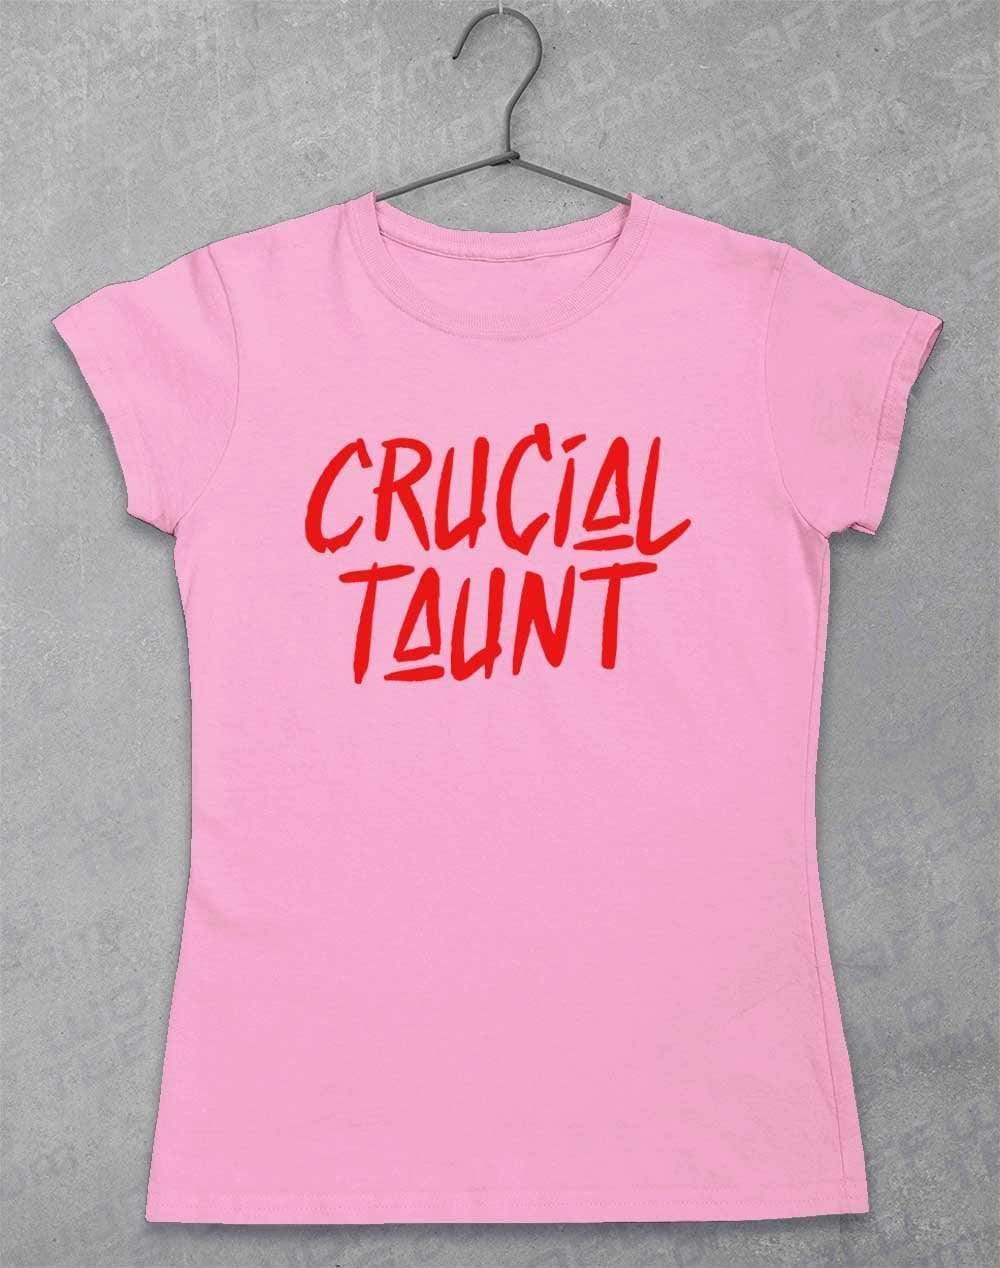 Crucial Taunt Womens T-Shirt 8-10 / Light Pink  - Off World Tees